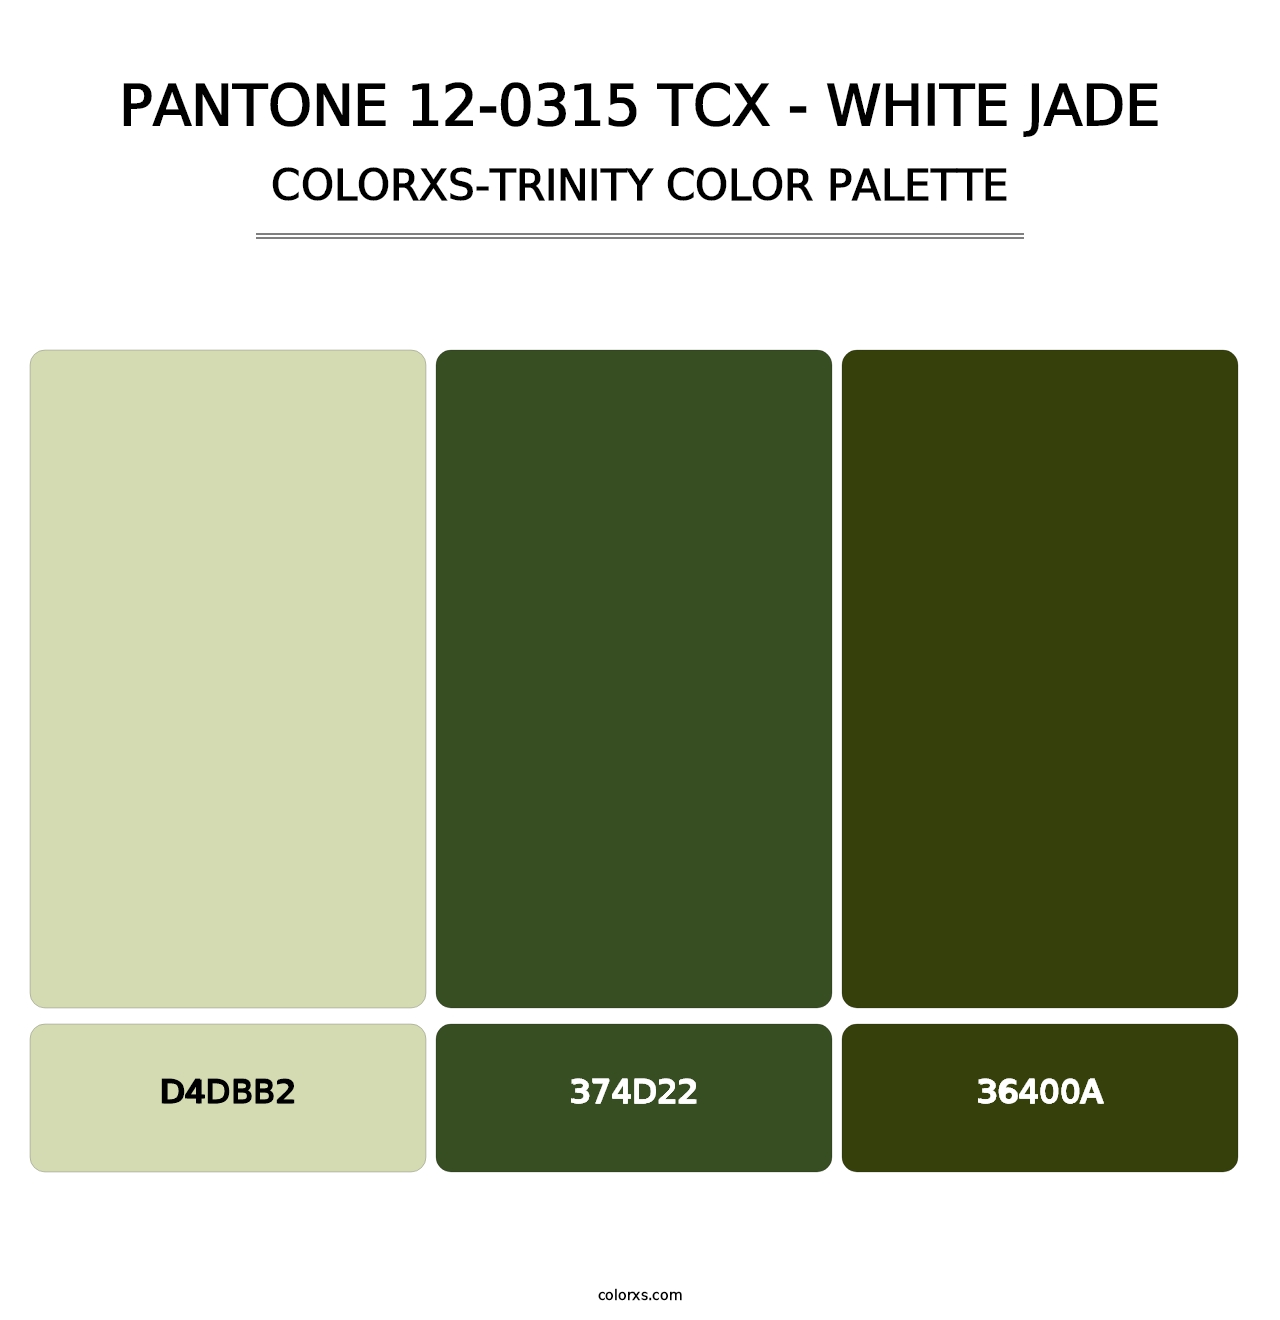 PANTONE 12-0315 TCX - White Jade - Colorxs Trinity Palette